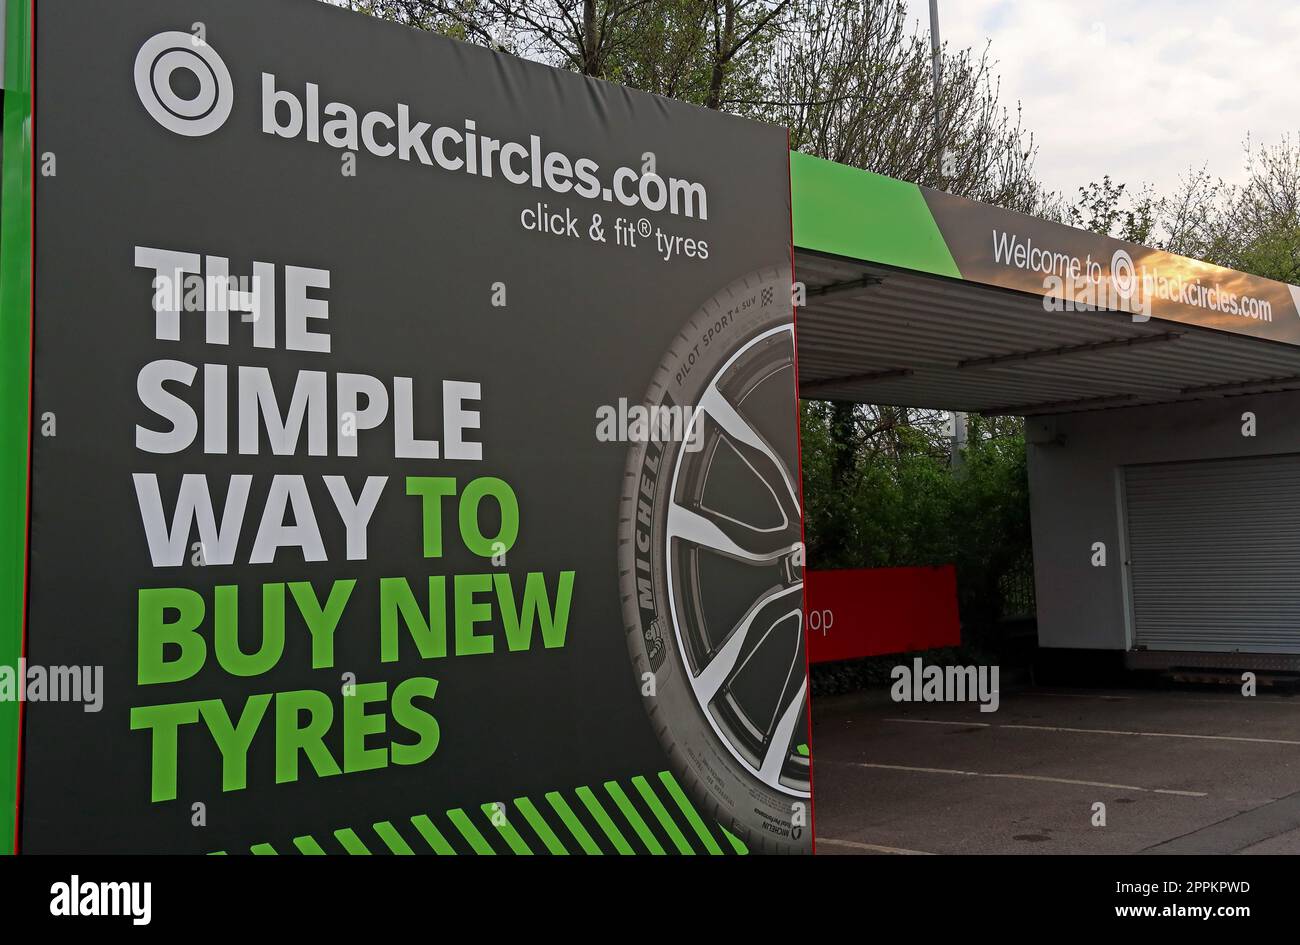 Black Circles - Blackcircles.com - The simple way to buy new tyres - At Morrisons supermarket, Greenall's Ave, Warrington, Cheshire, UK, WA4 6RN Stock Photo